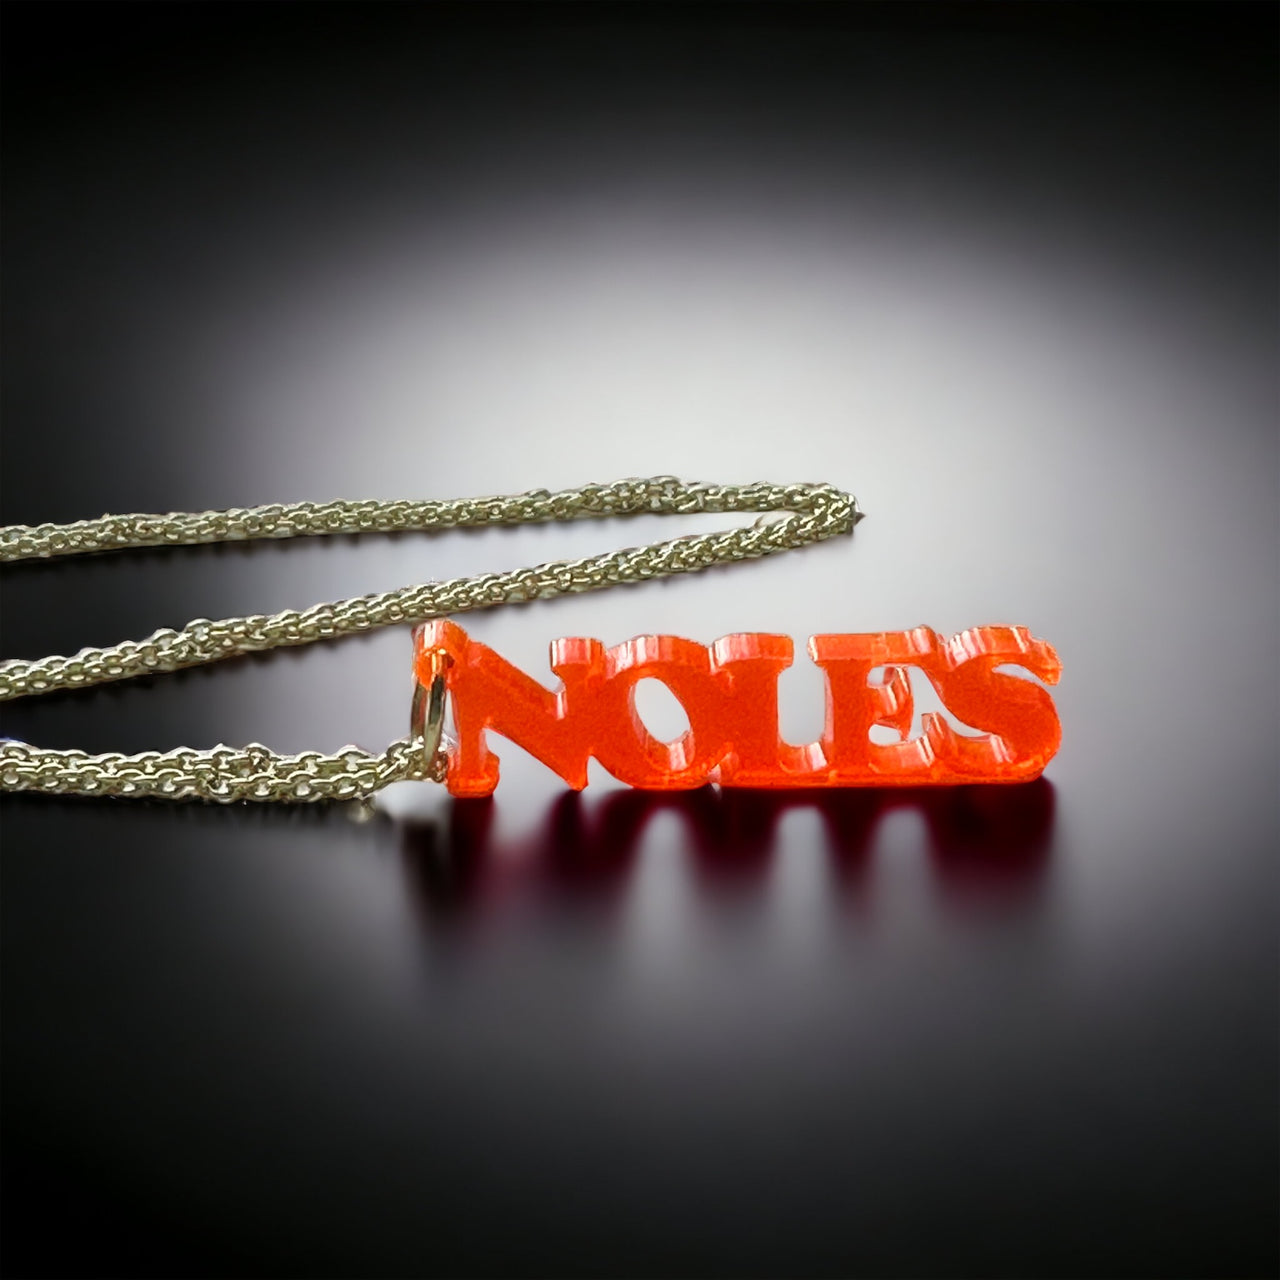 Acrylic NOLES (Orange) Mini Necklace